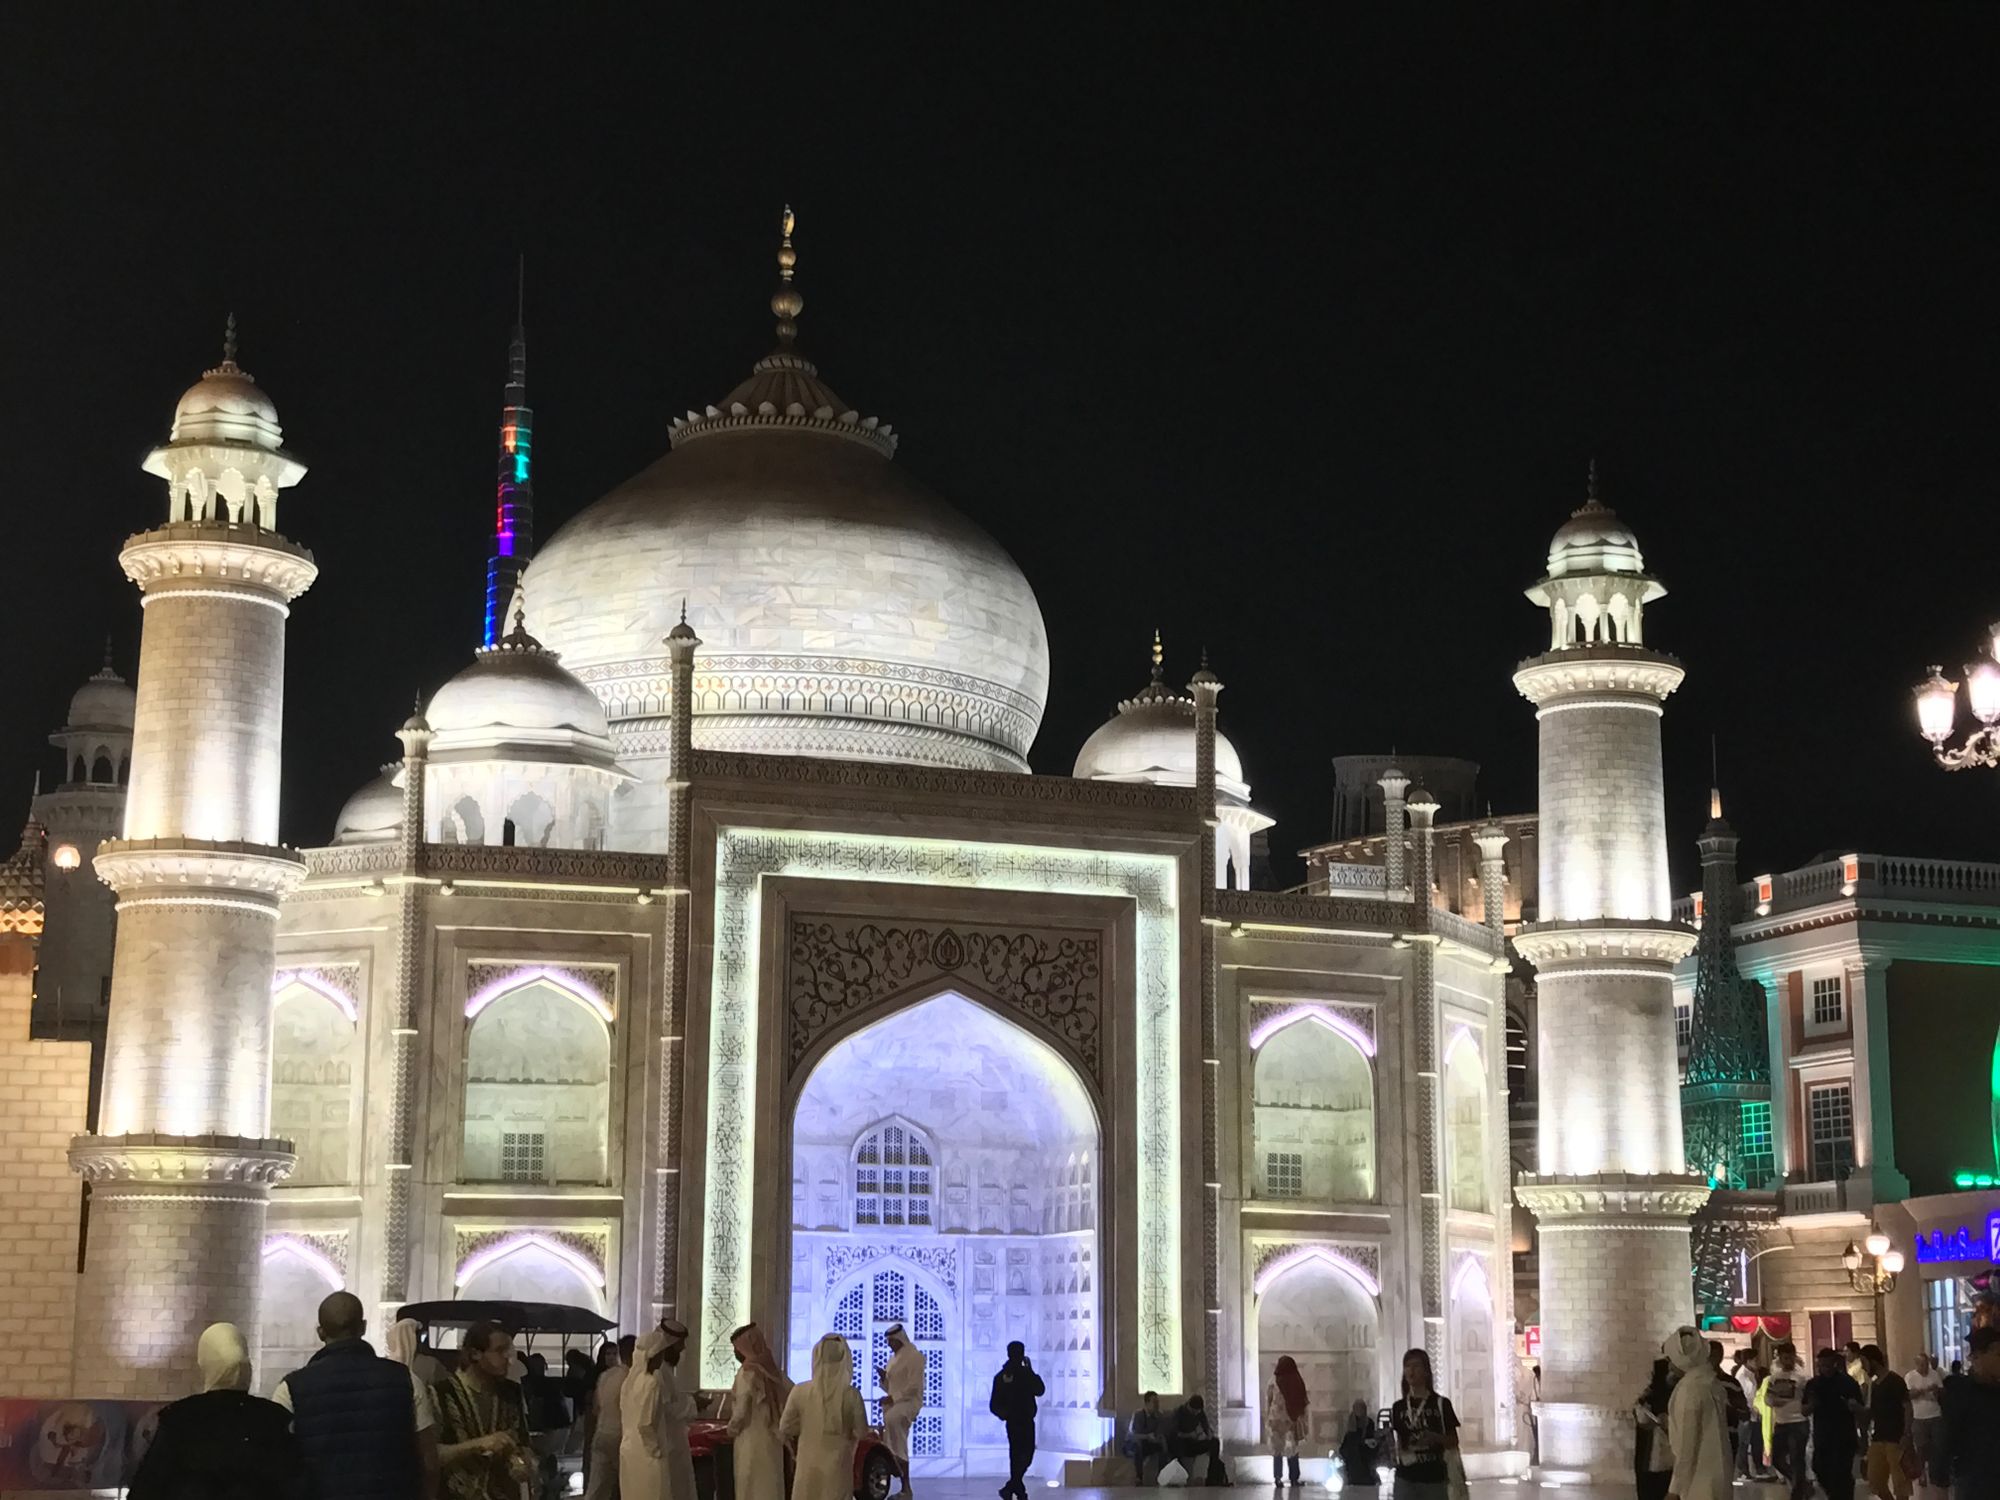 Global Village gets its own Taj Mahal this year